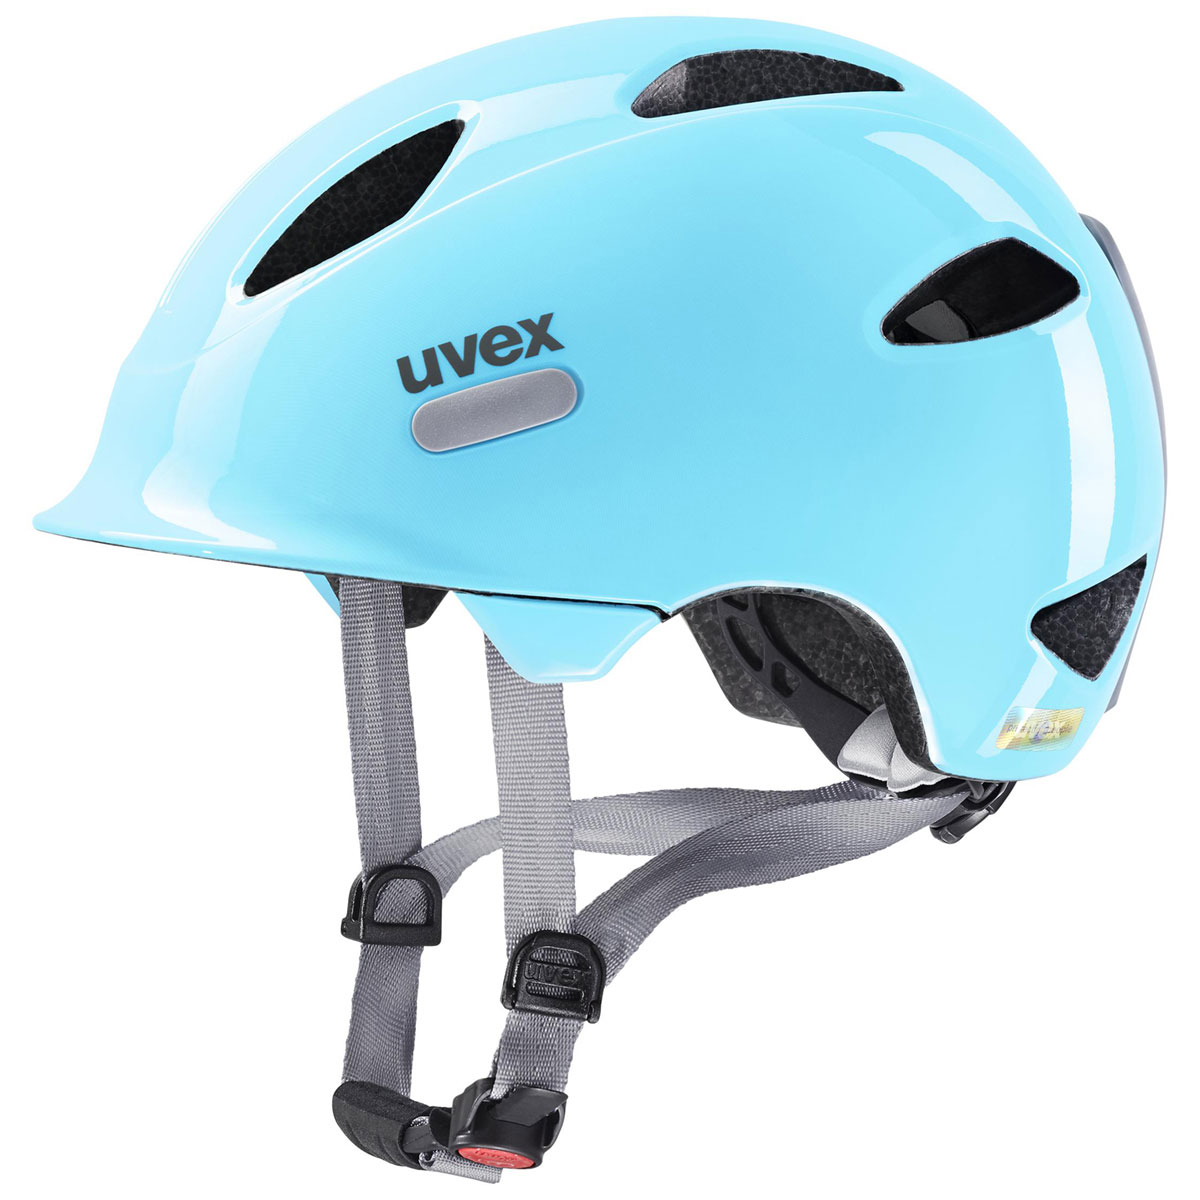 Dětská cyklistická helma Uvex OYO, Cloud Blue - Grey 50-54cm